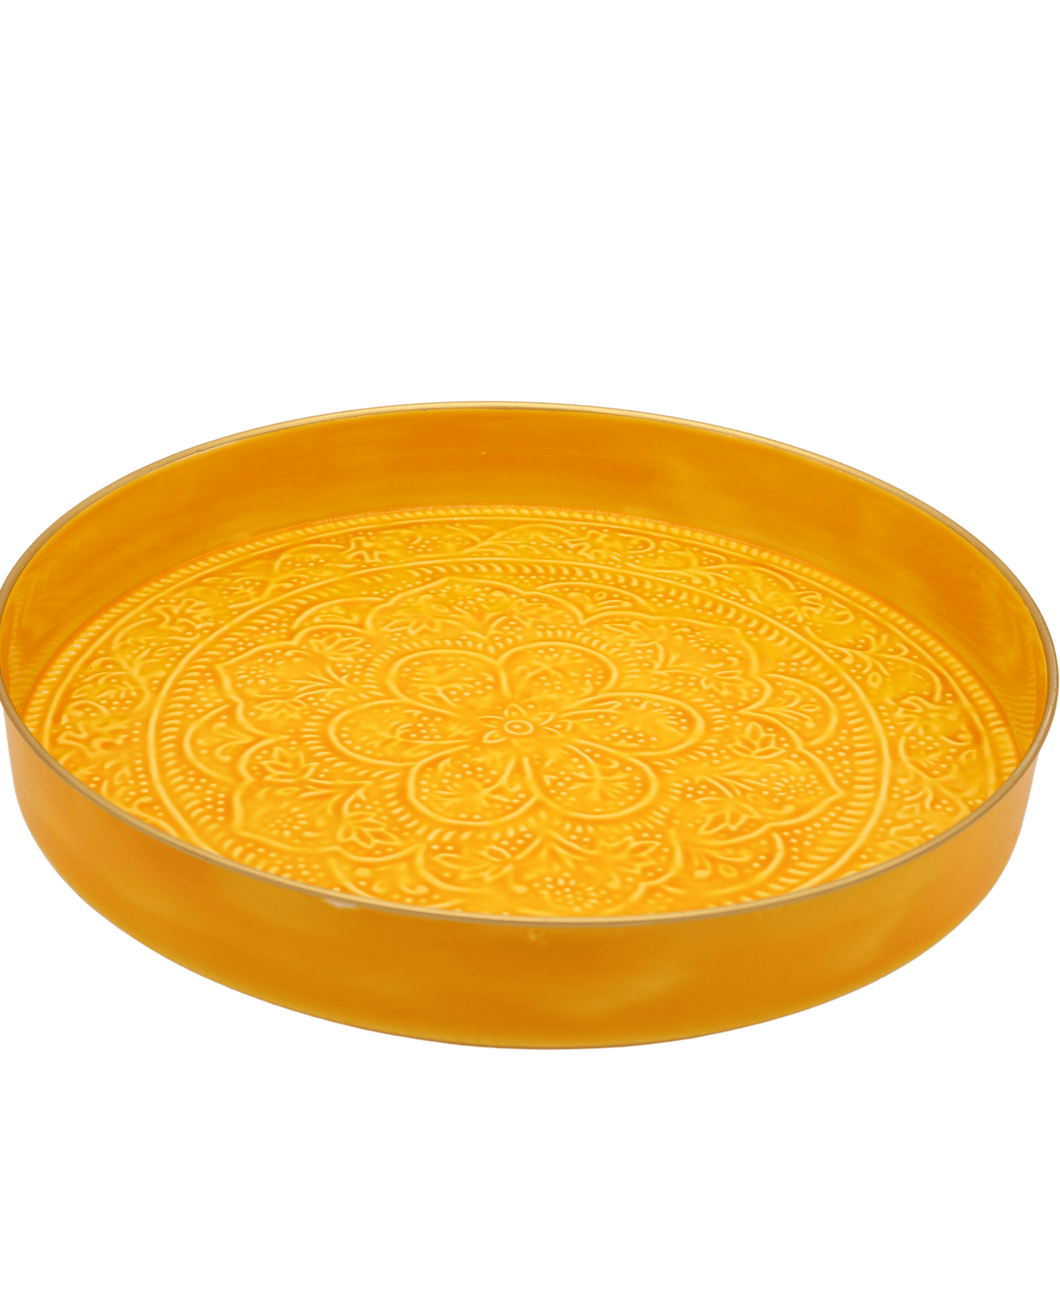 Large Yellow Tray